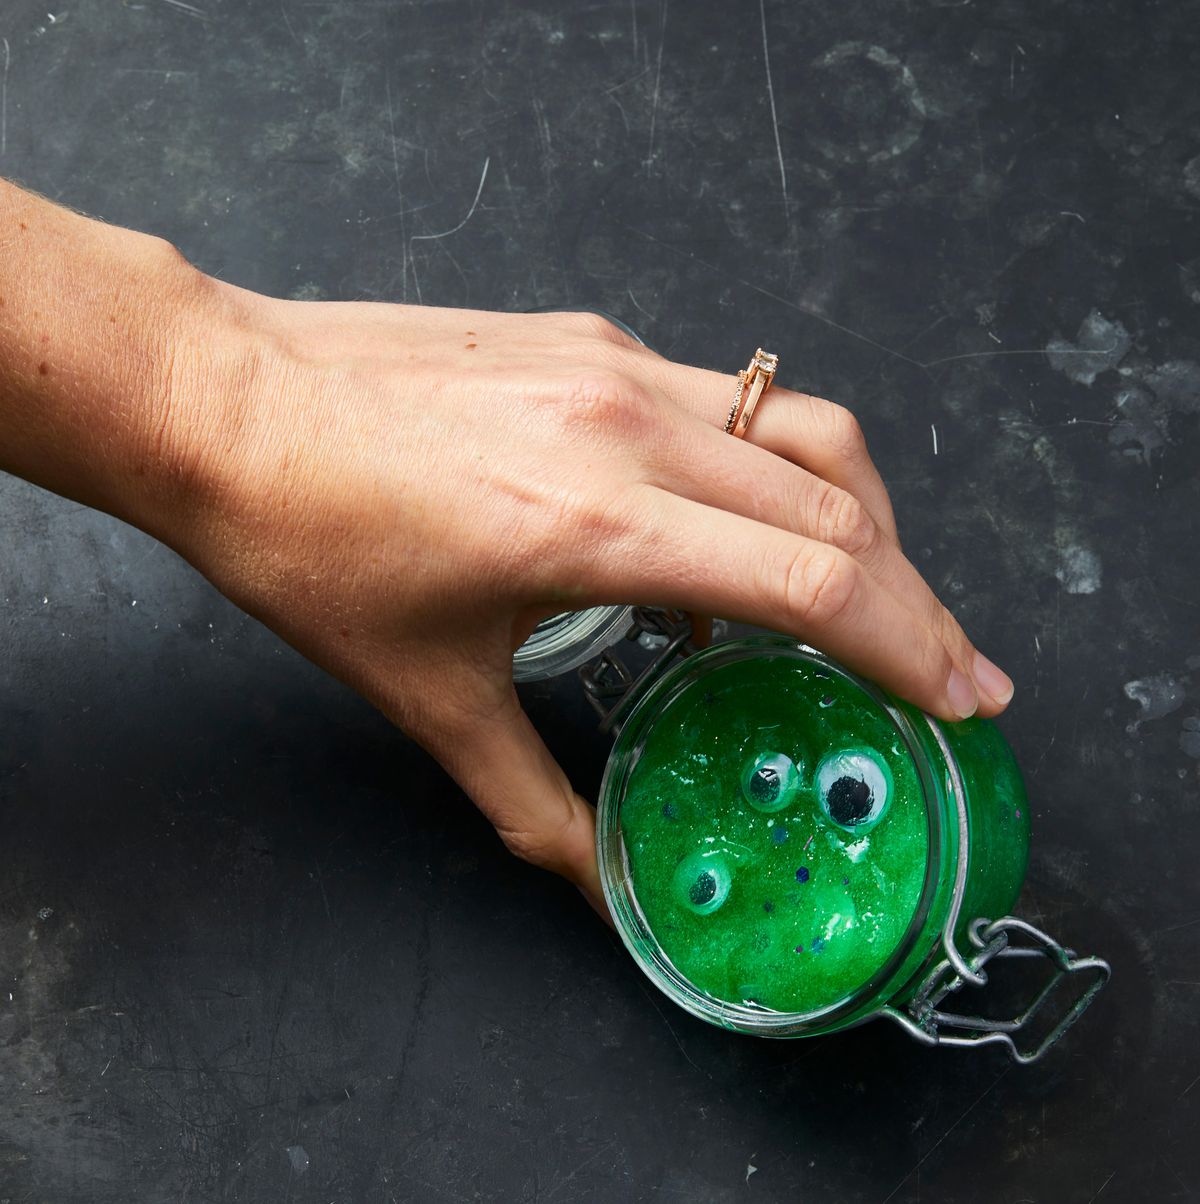 Eyeball Mason Jars with Homemade Glittery Slime